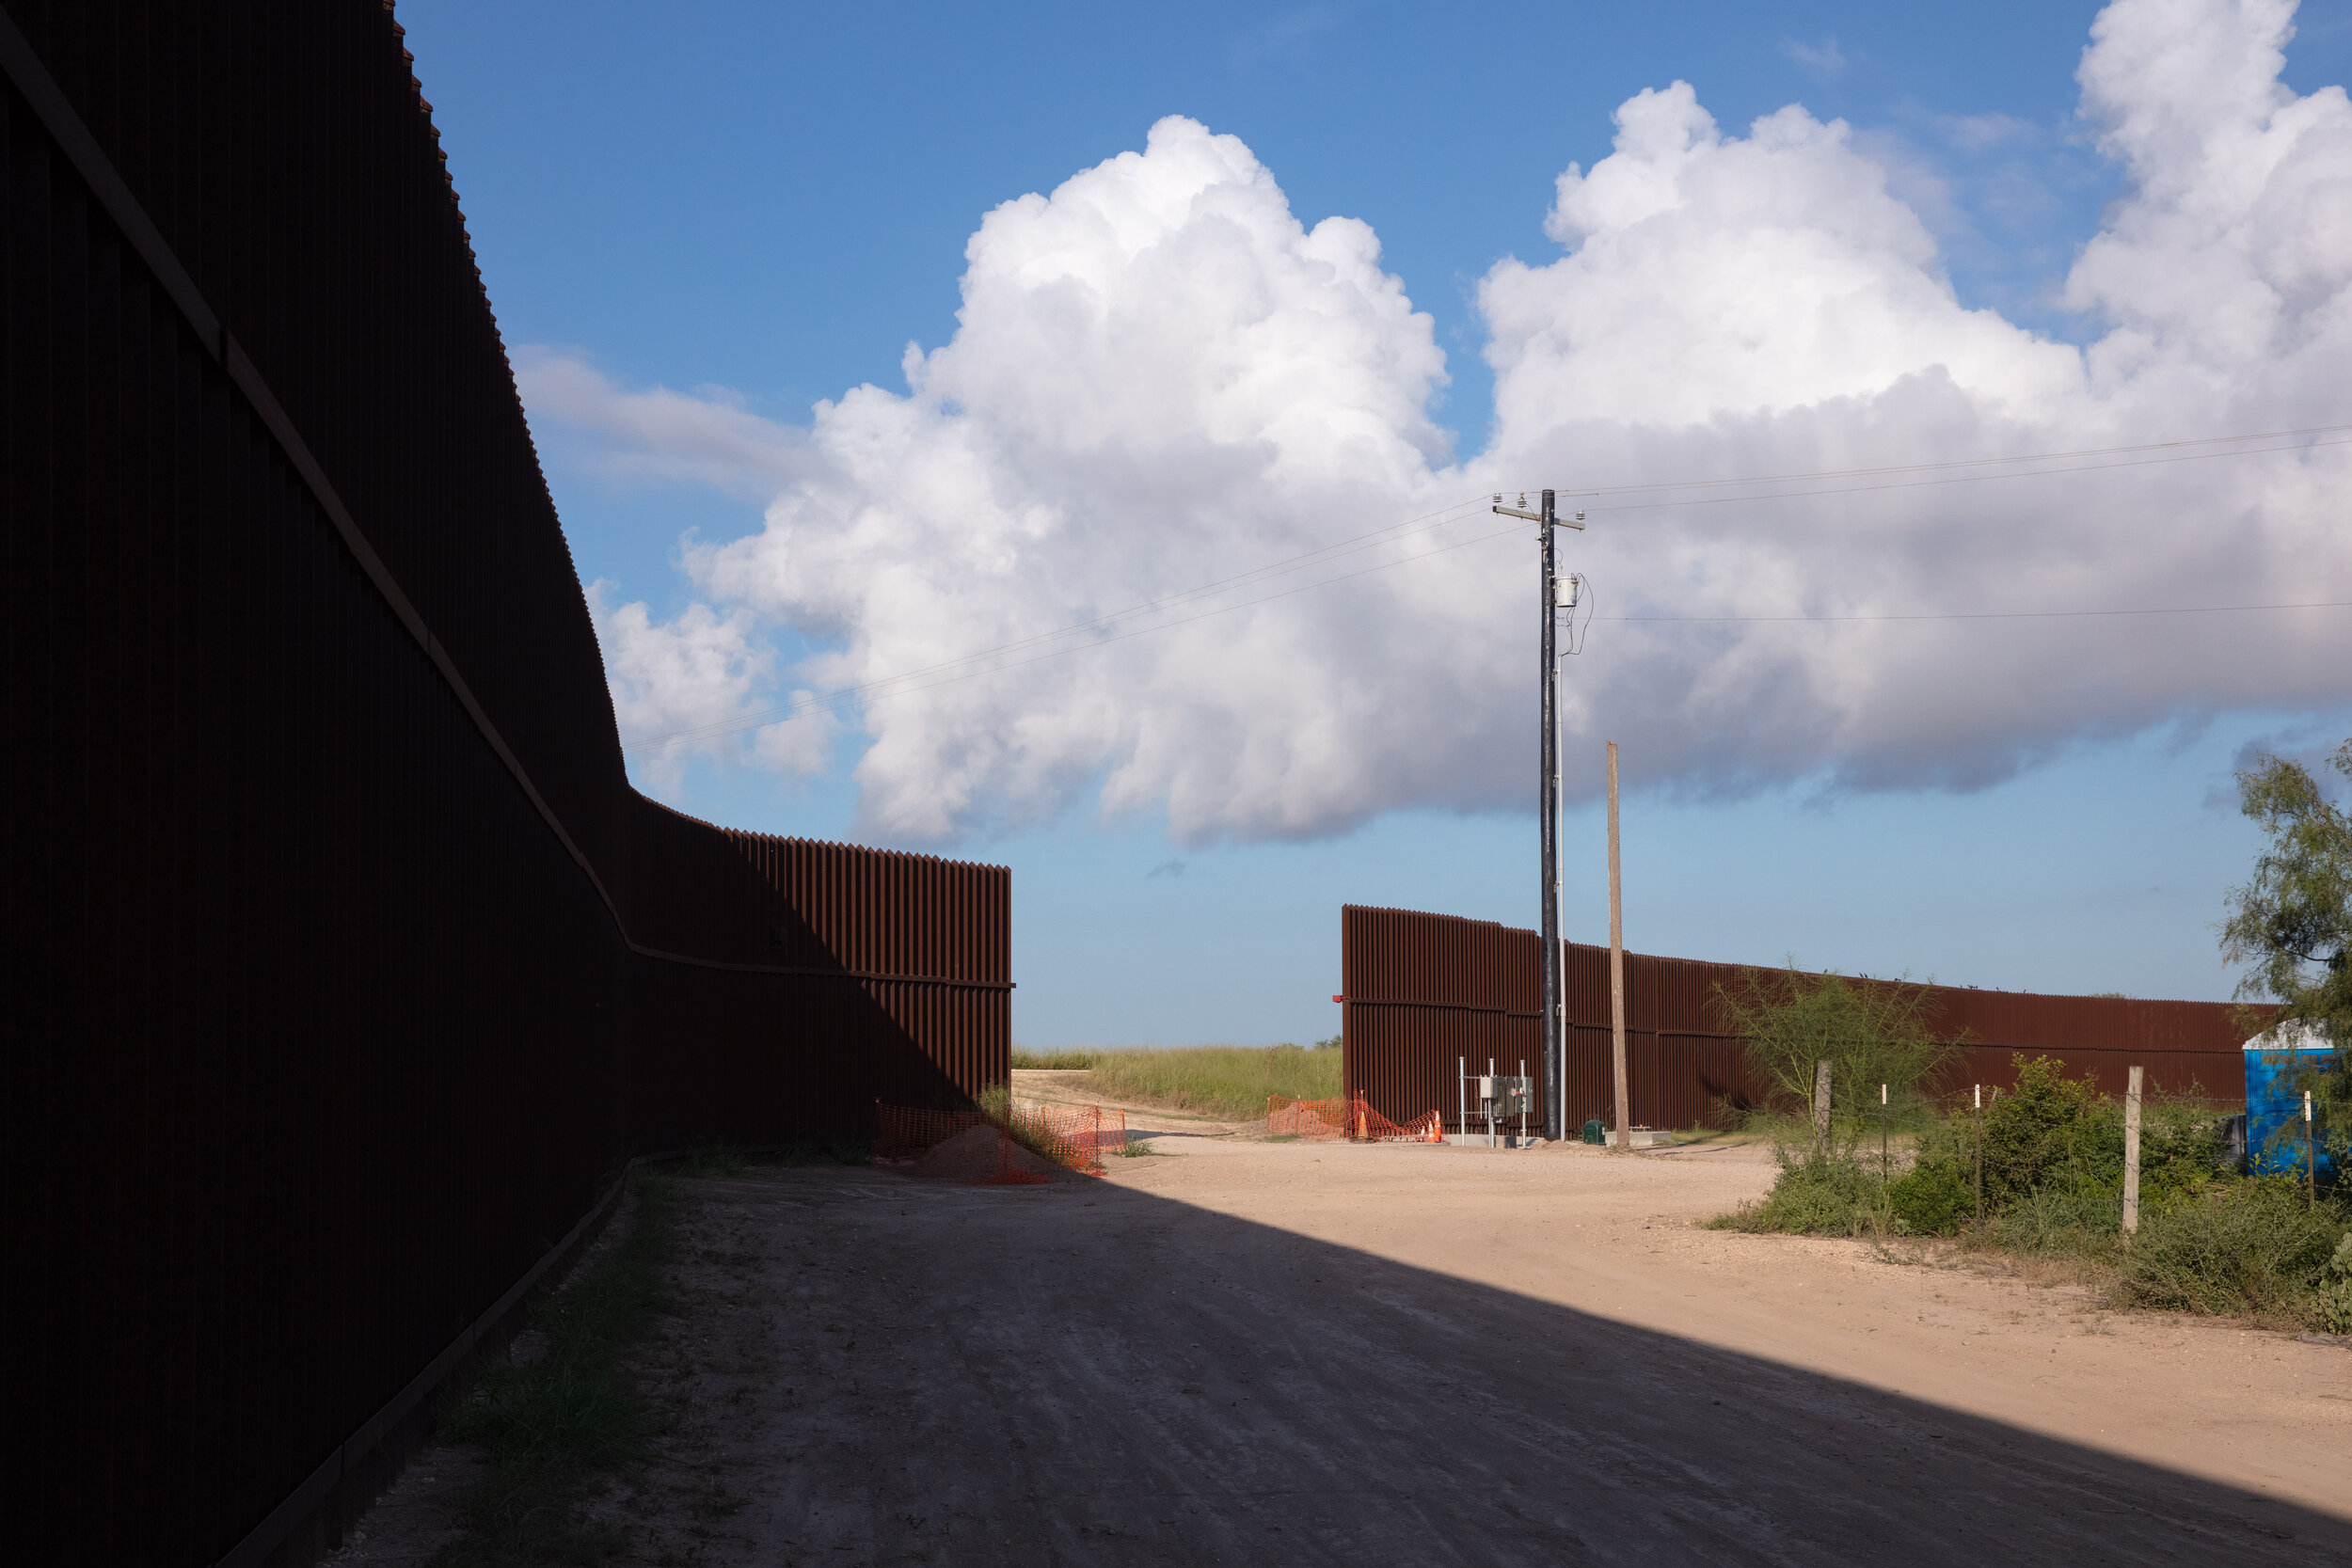  The Mexico-United States border fence – El Calaboz, Texas, 2019  